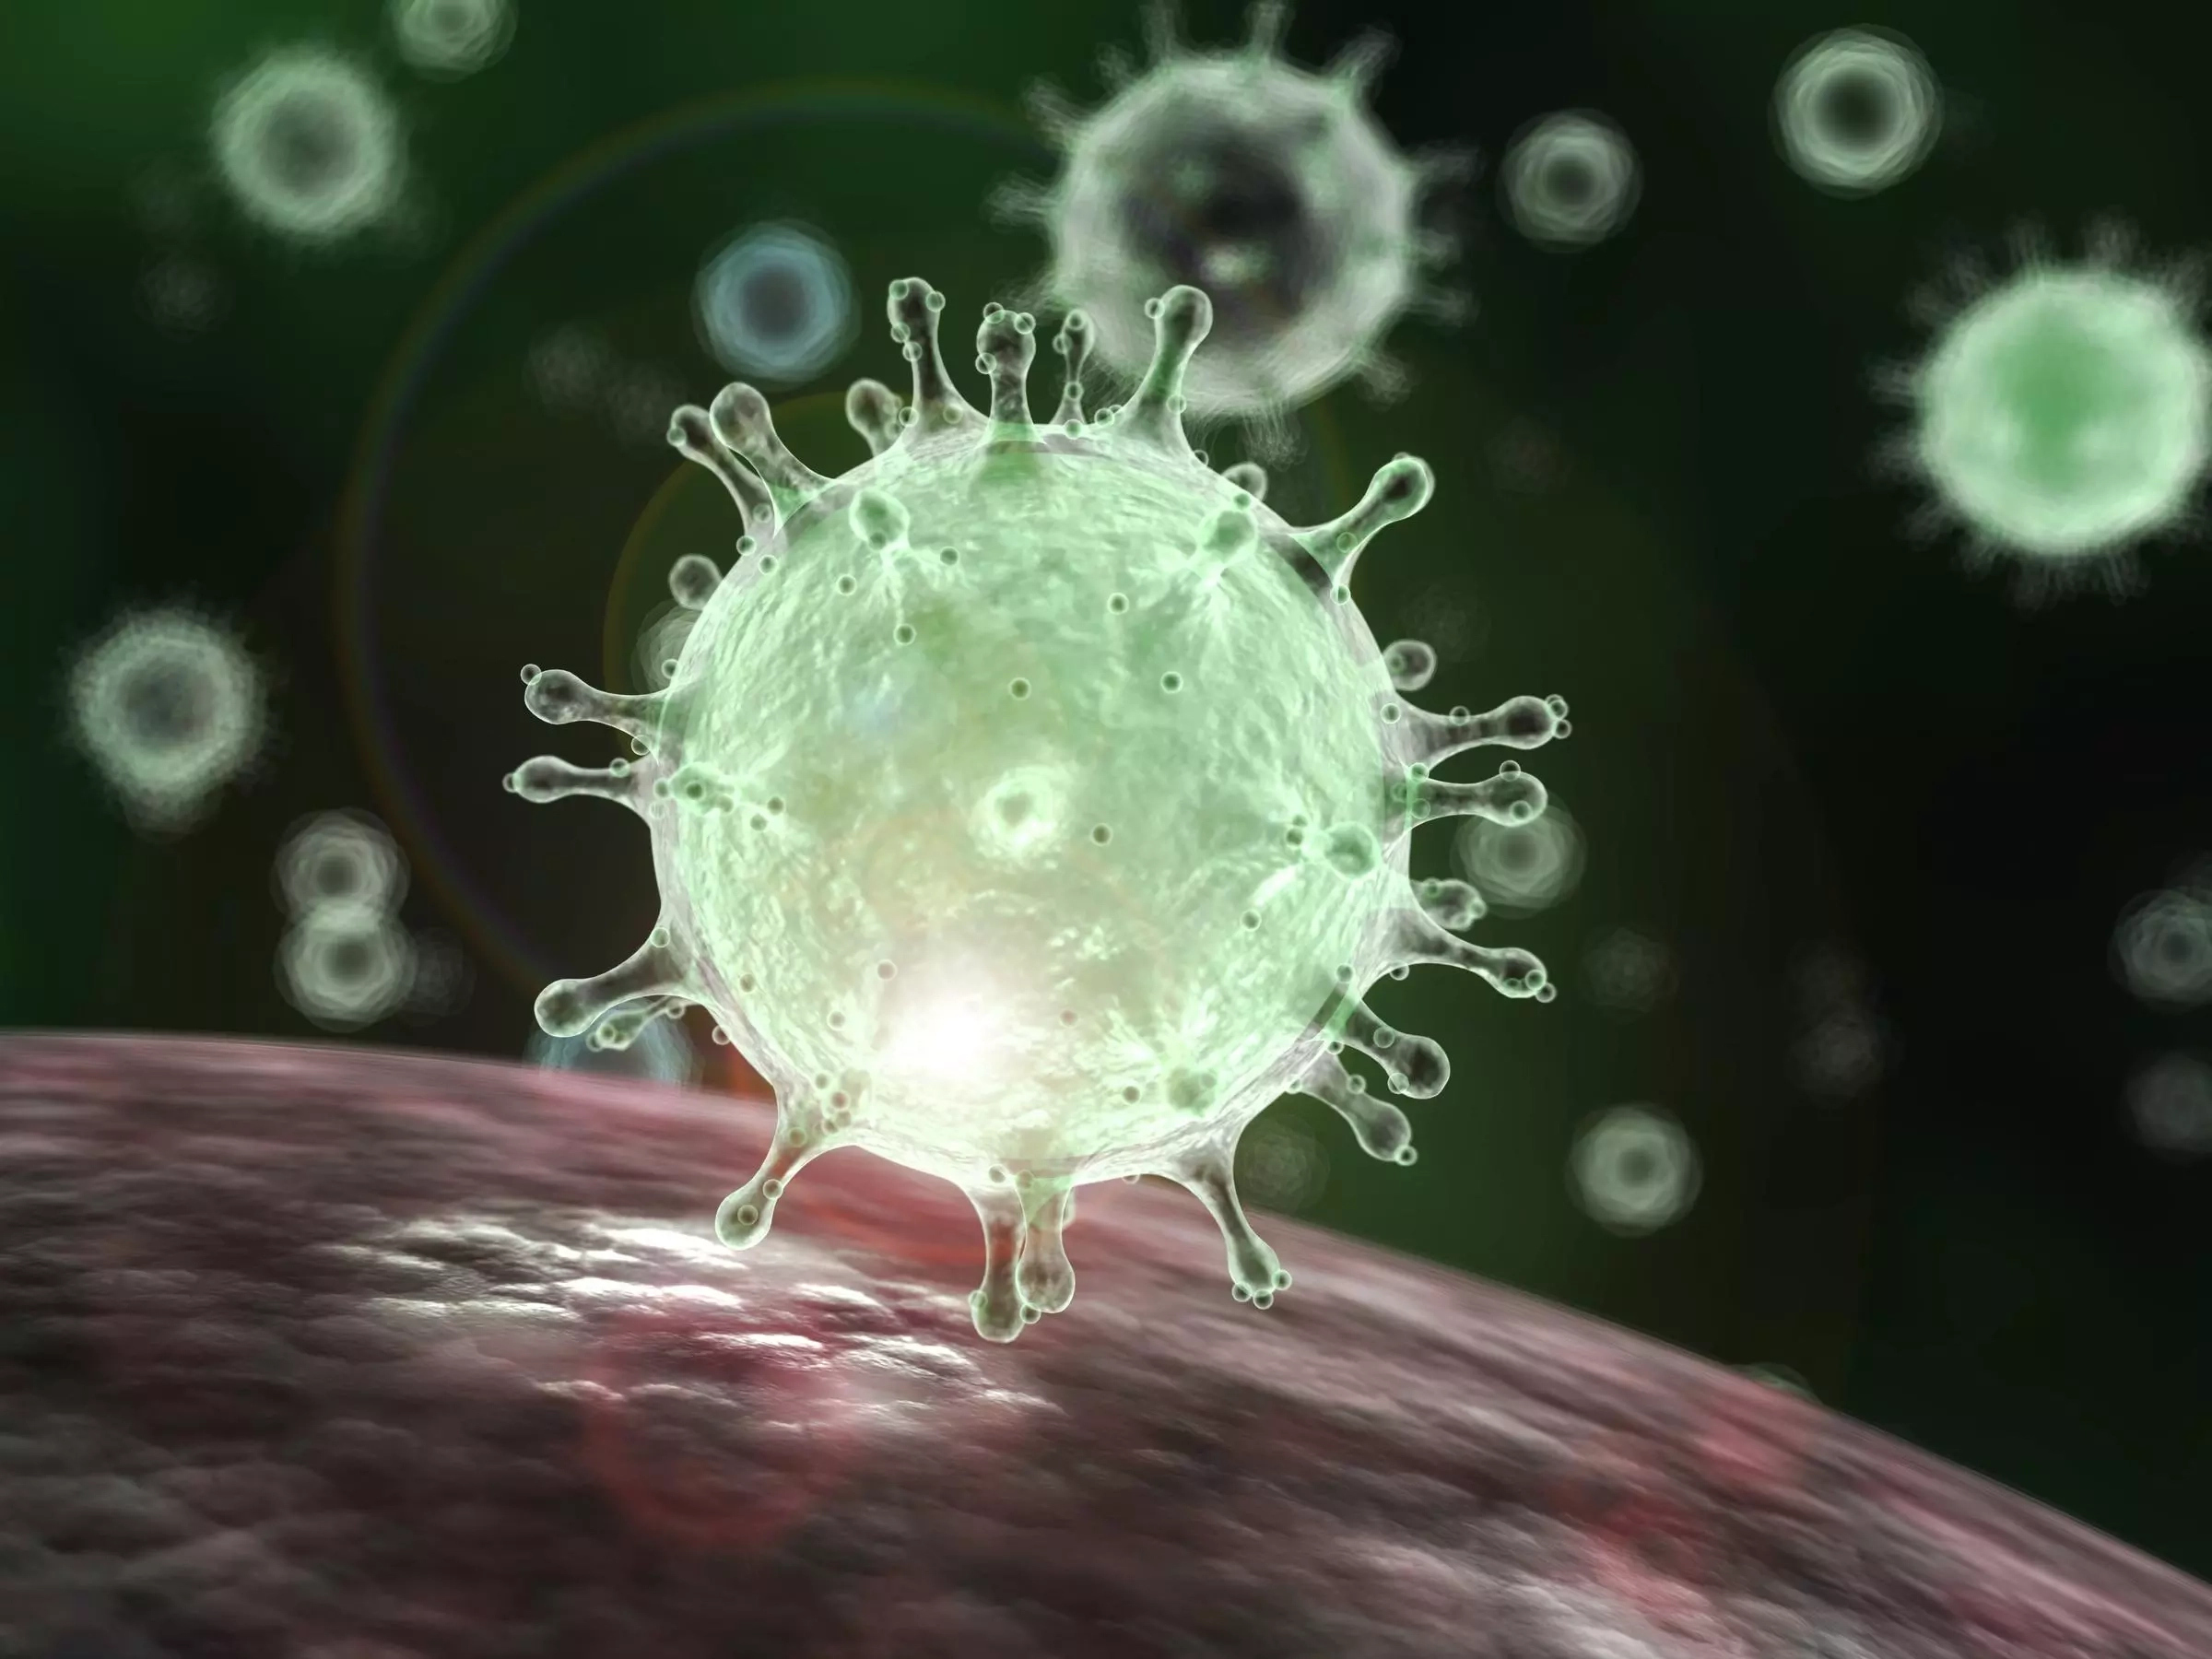 Health Alert: Corona Virus may have spread to Africa - HSEWatch.com2400 x 1800